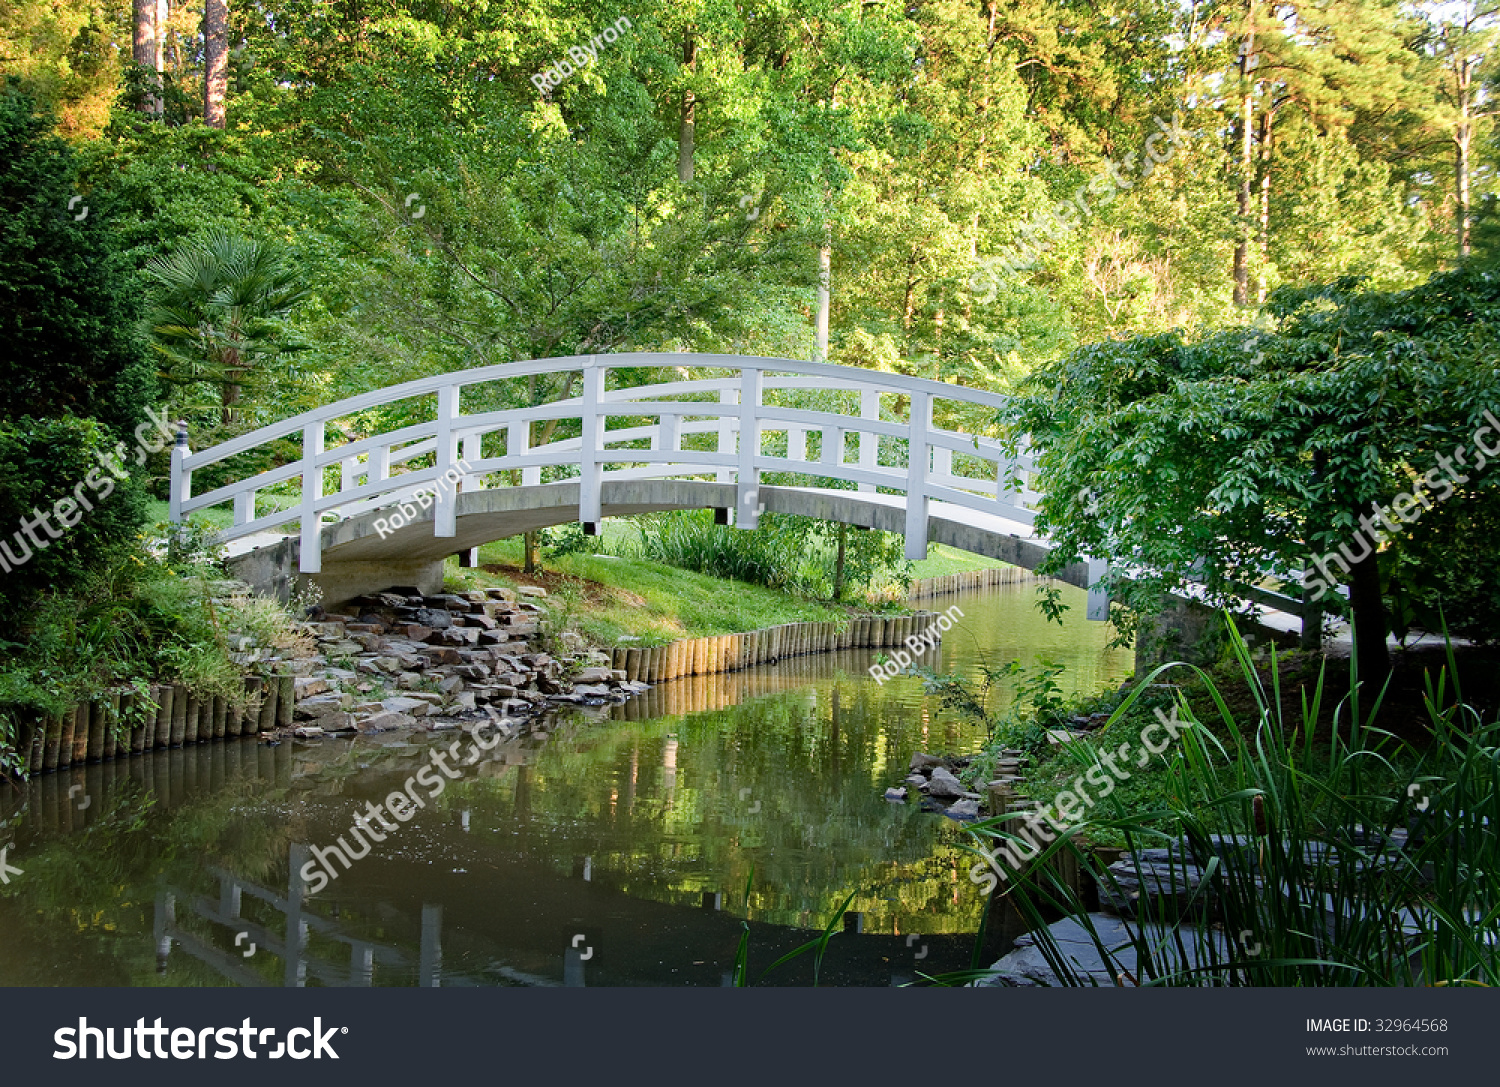 Arched Wooden Bridge Stock Photo 32964568 - Shutterstock